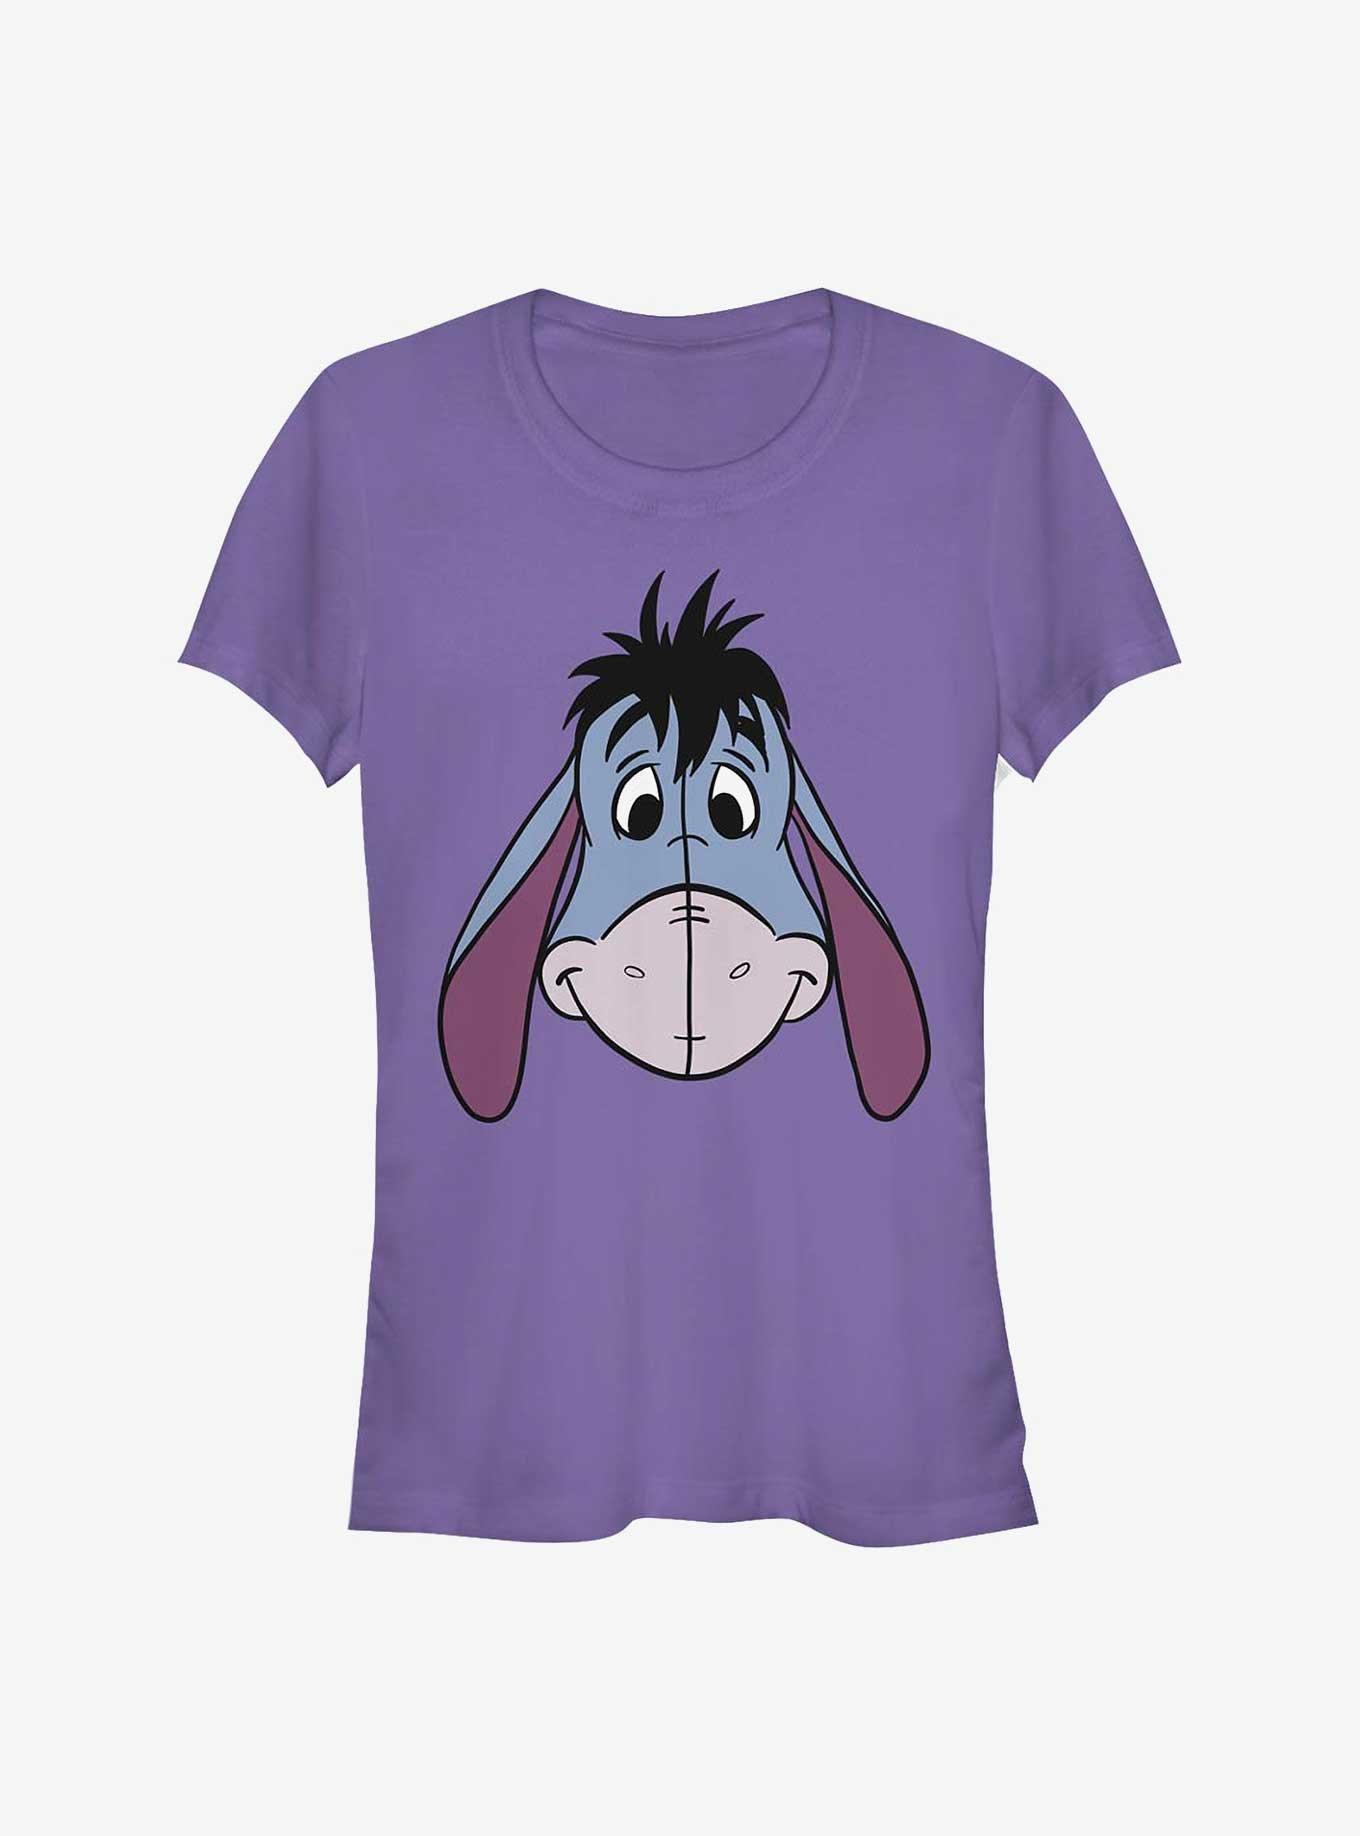 Disney Winnie The Pooh Big Face Eeyore Girls T-Shirt, PURPLE, hi-res